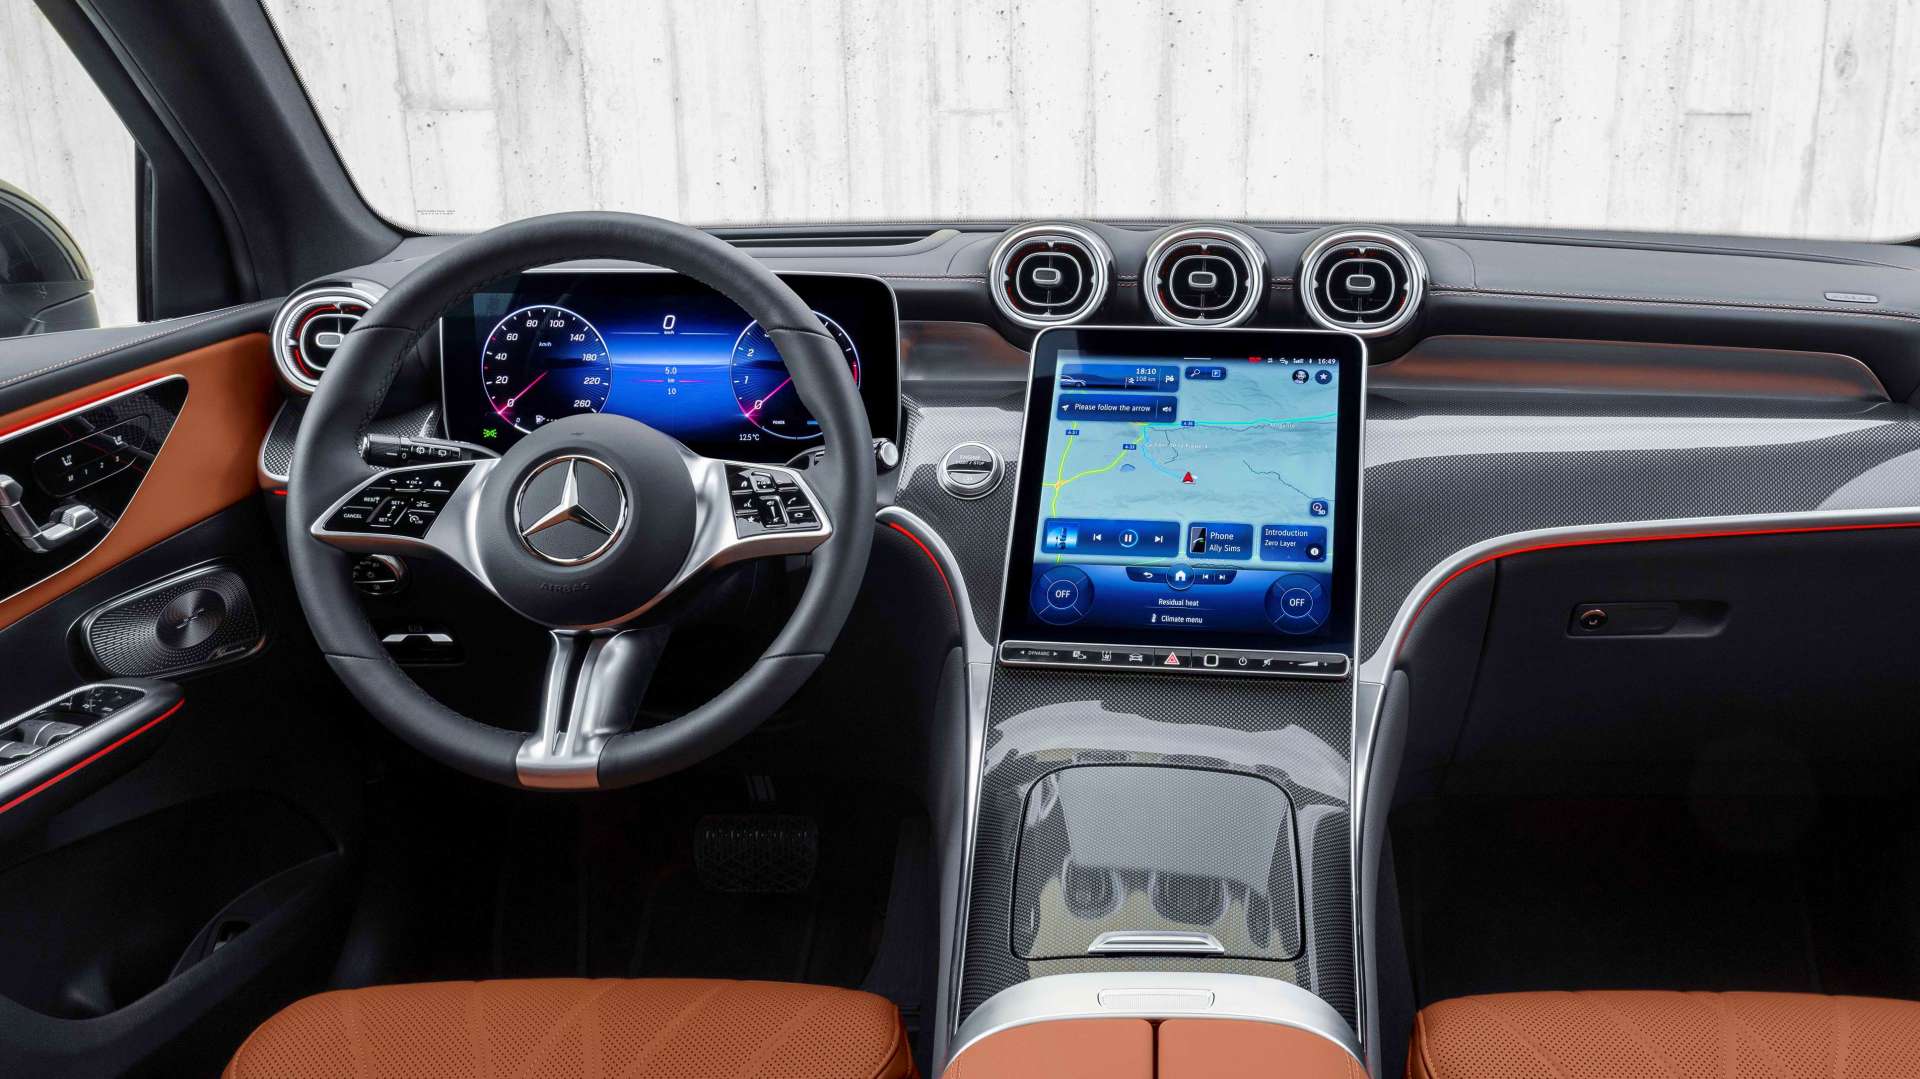 New Mercedes GLC interior